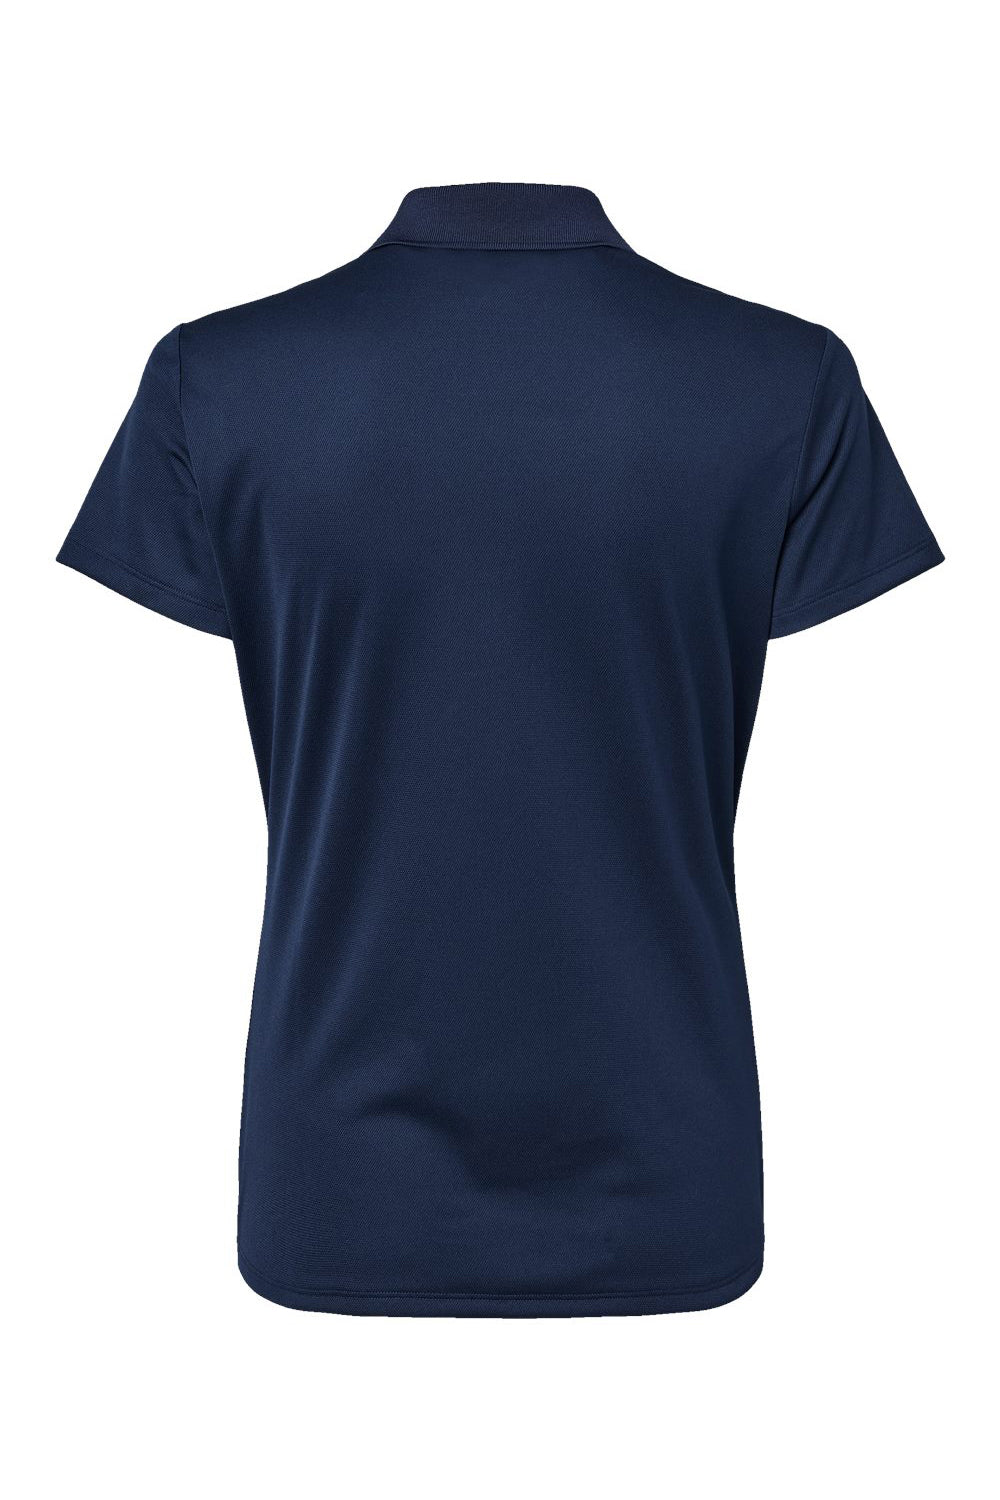 Adidas A431 Womens UV Protection Short Sleeve Polo Shirt Collegiate Navy Blue Flat Back